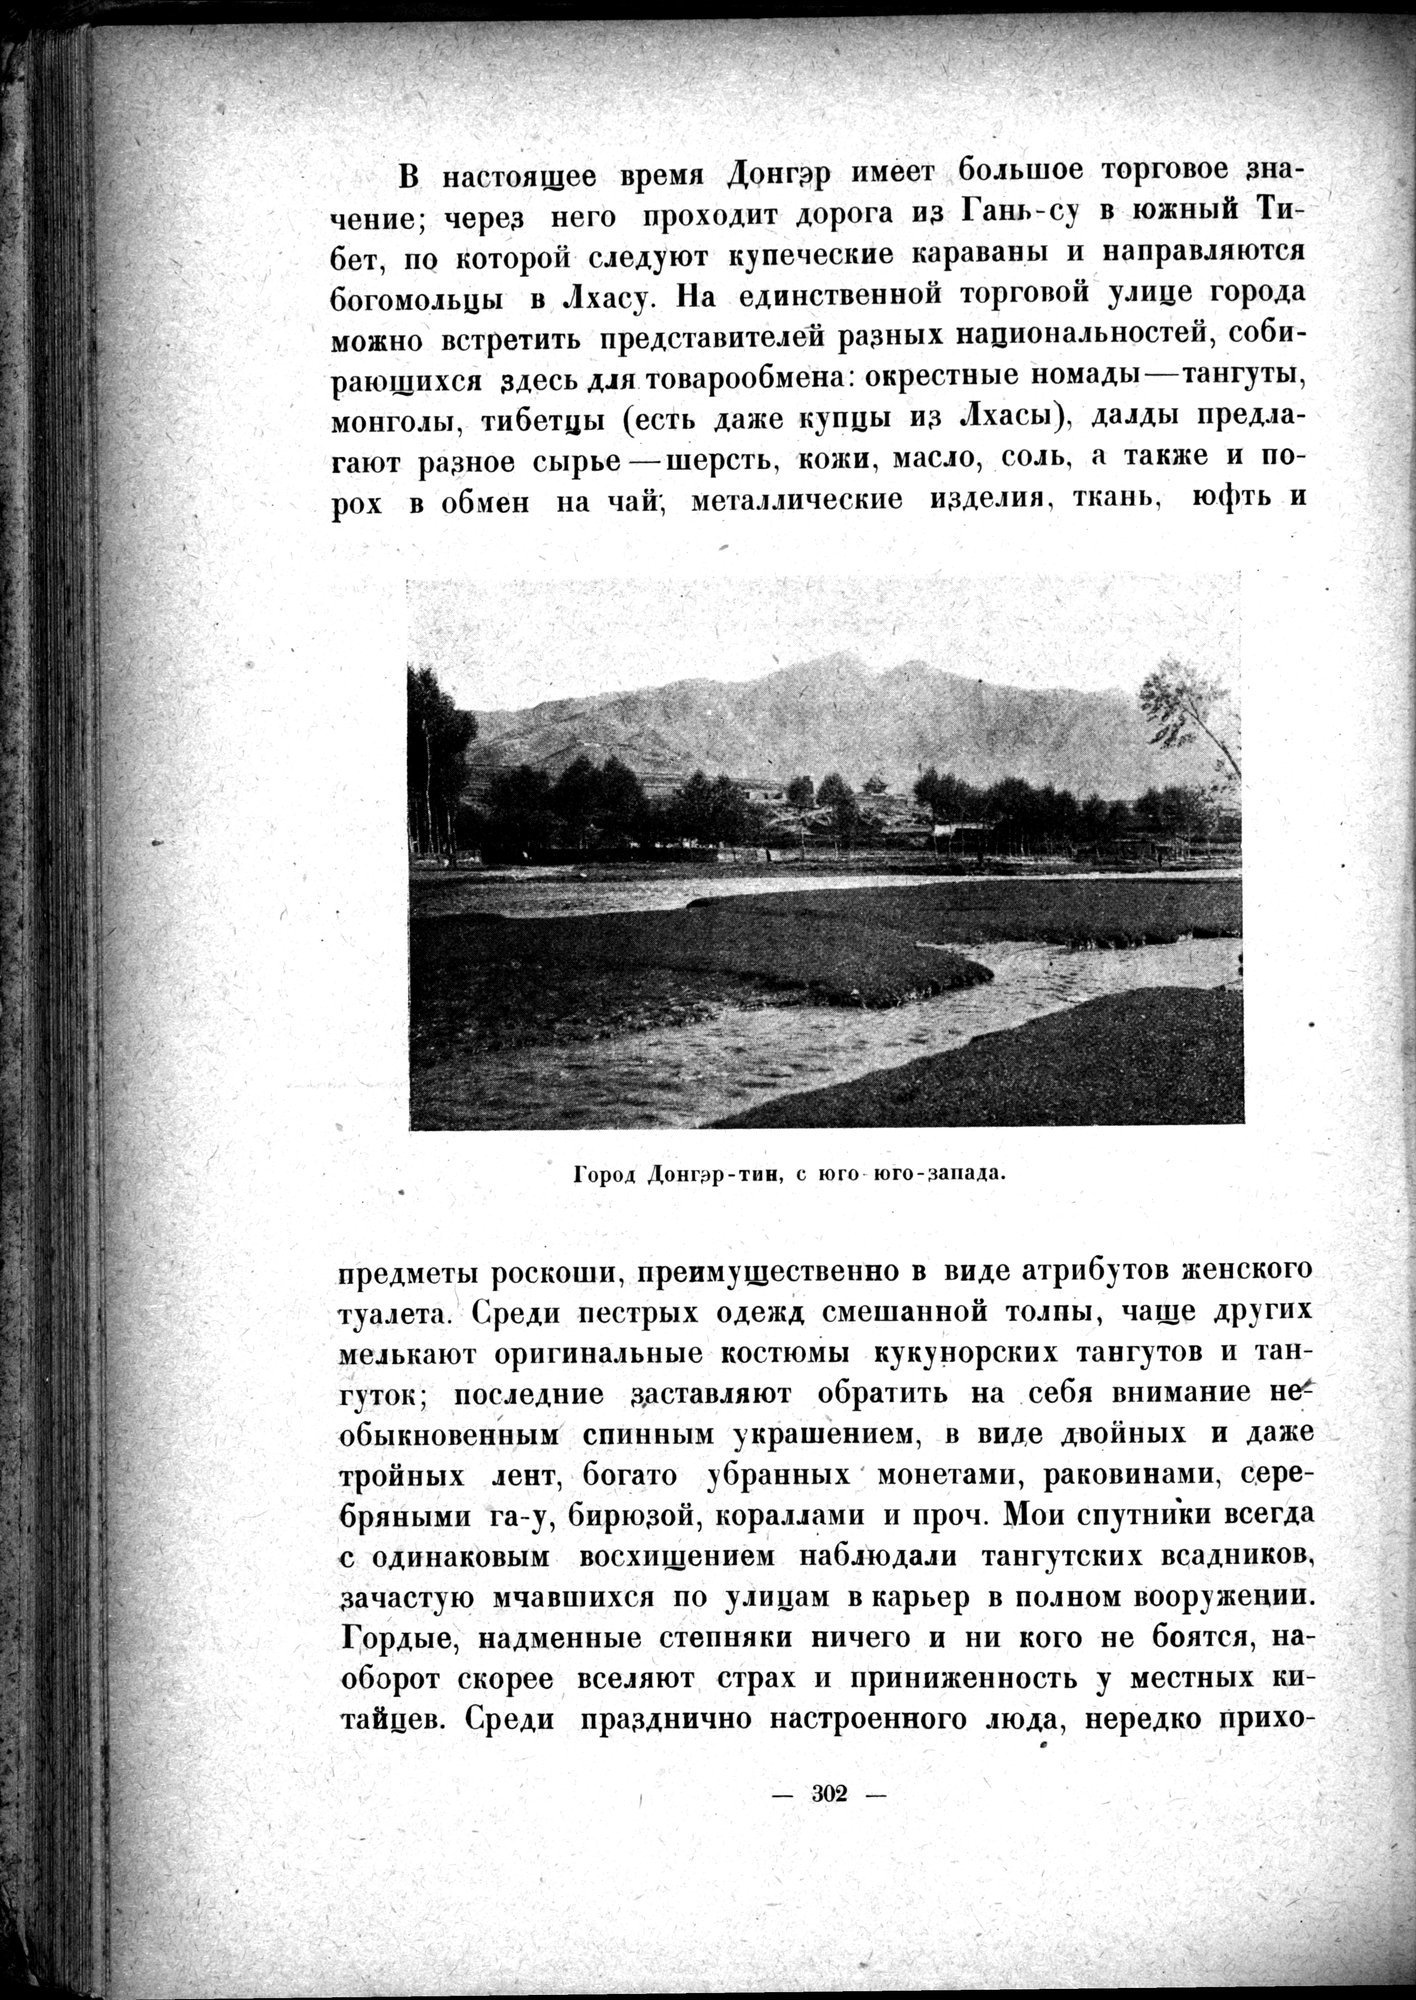 Mongoliya i Amdo i mertby gorod Khara-Khoto : vol.1 / Page 352 (Grayscale High Resolution Image)